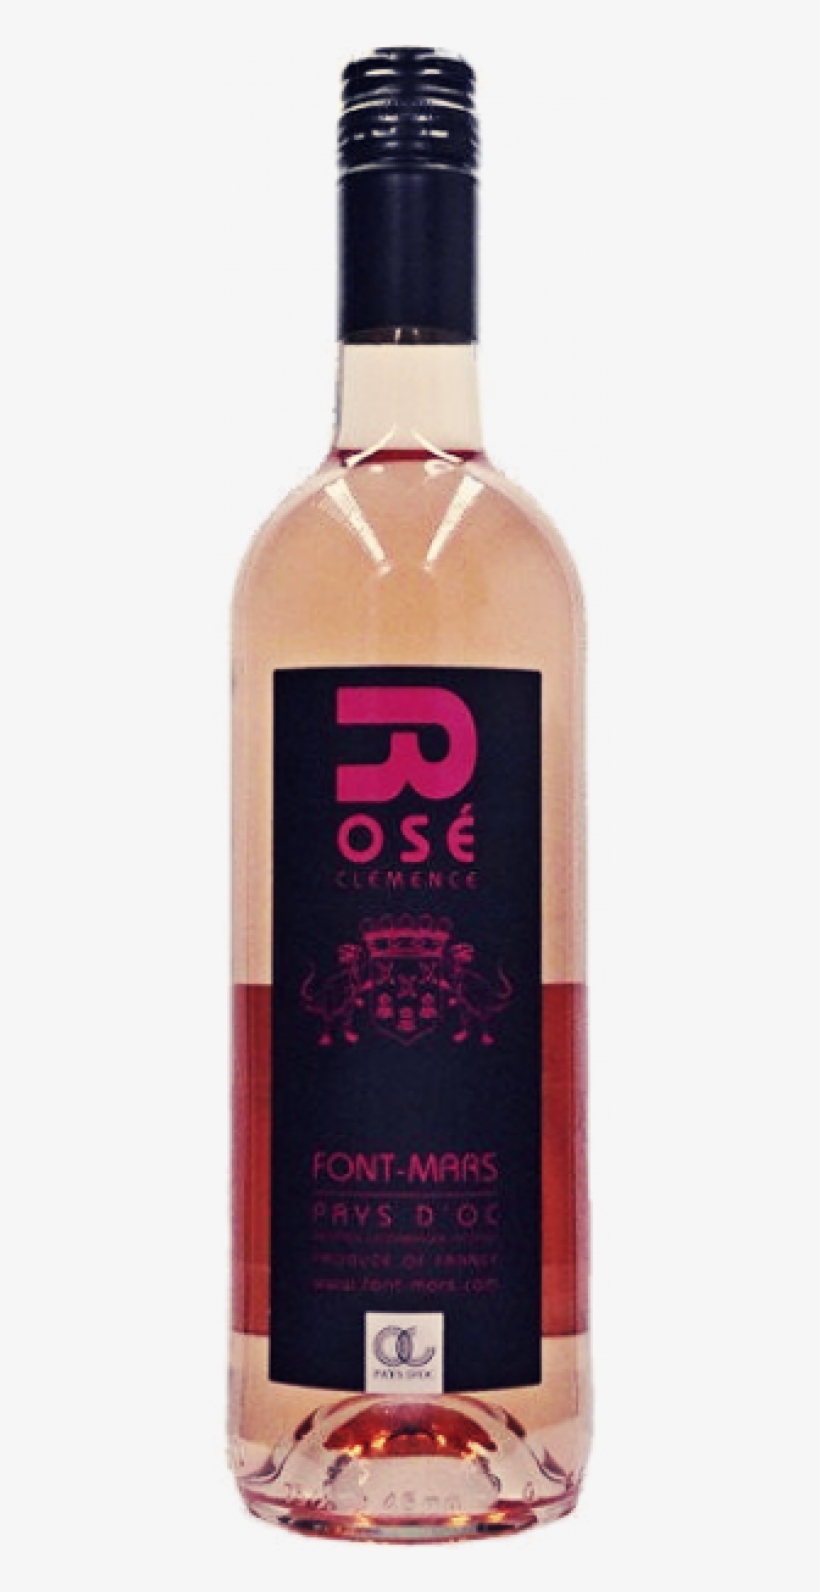 Font-mars Rose Clemence Pays D'oc - Two-liter Bottle, transparent png #9784144